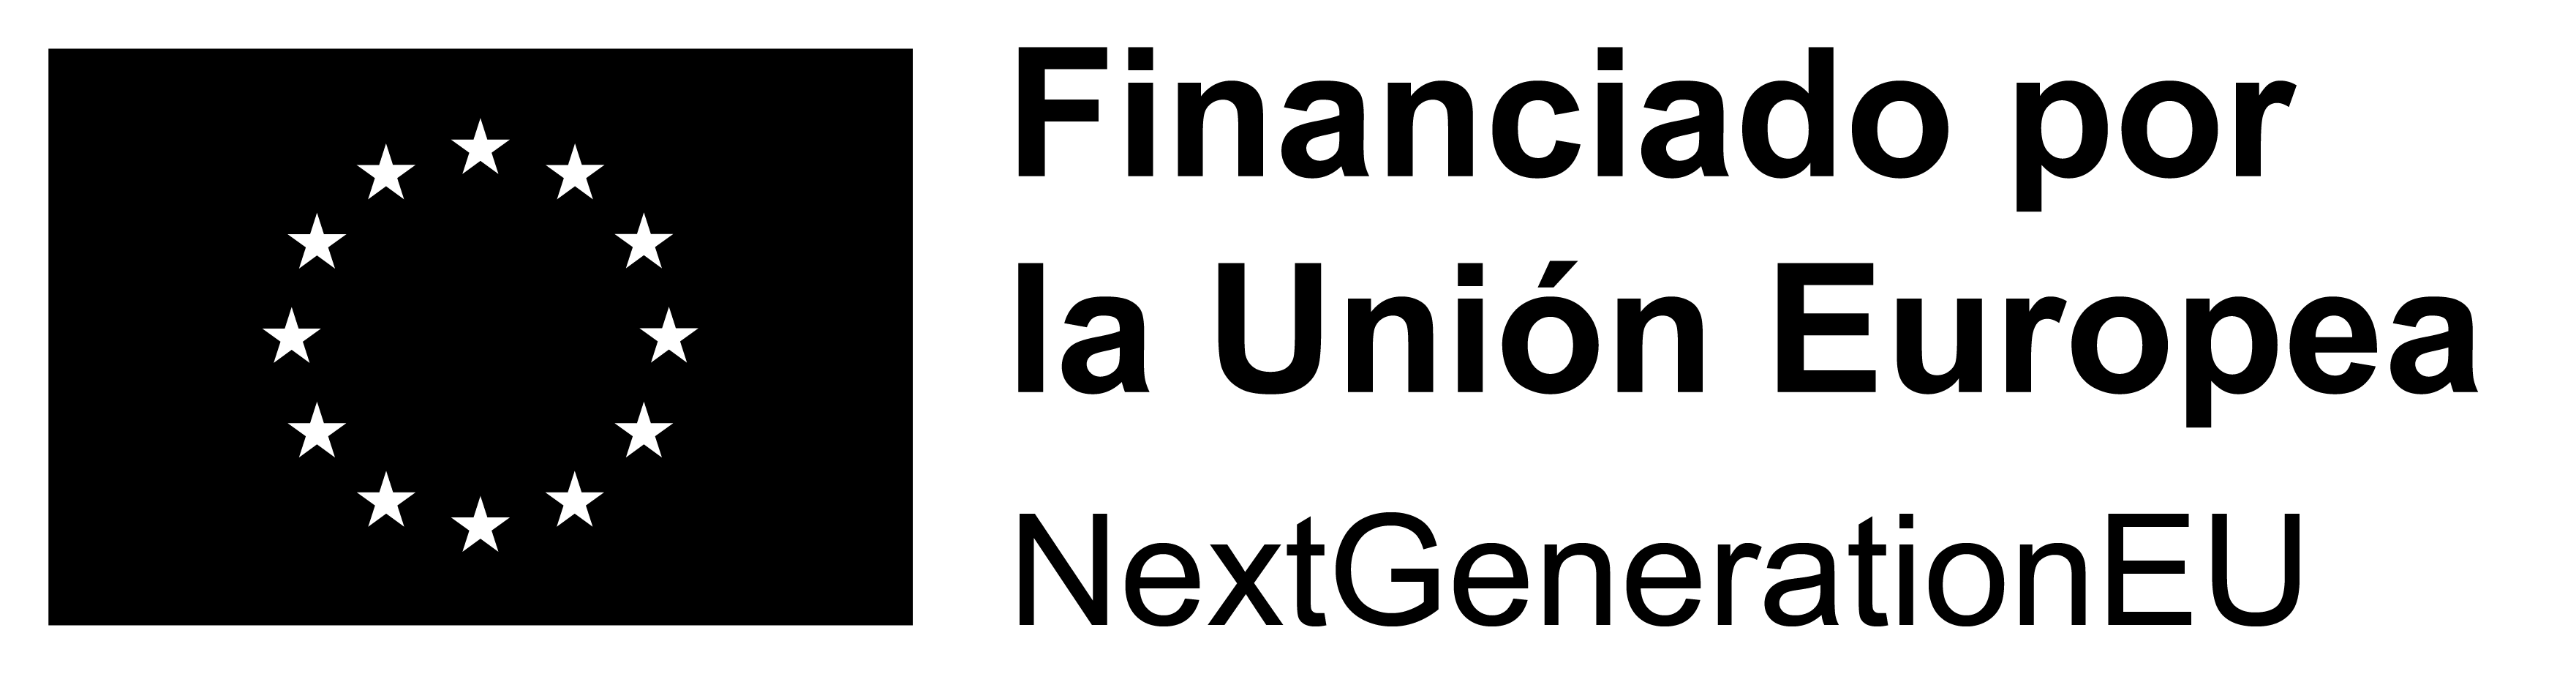 Logotipo NextGenerationEU